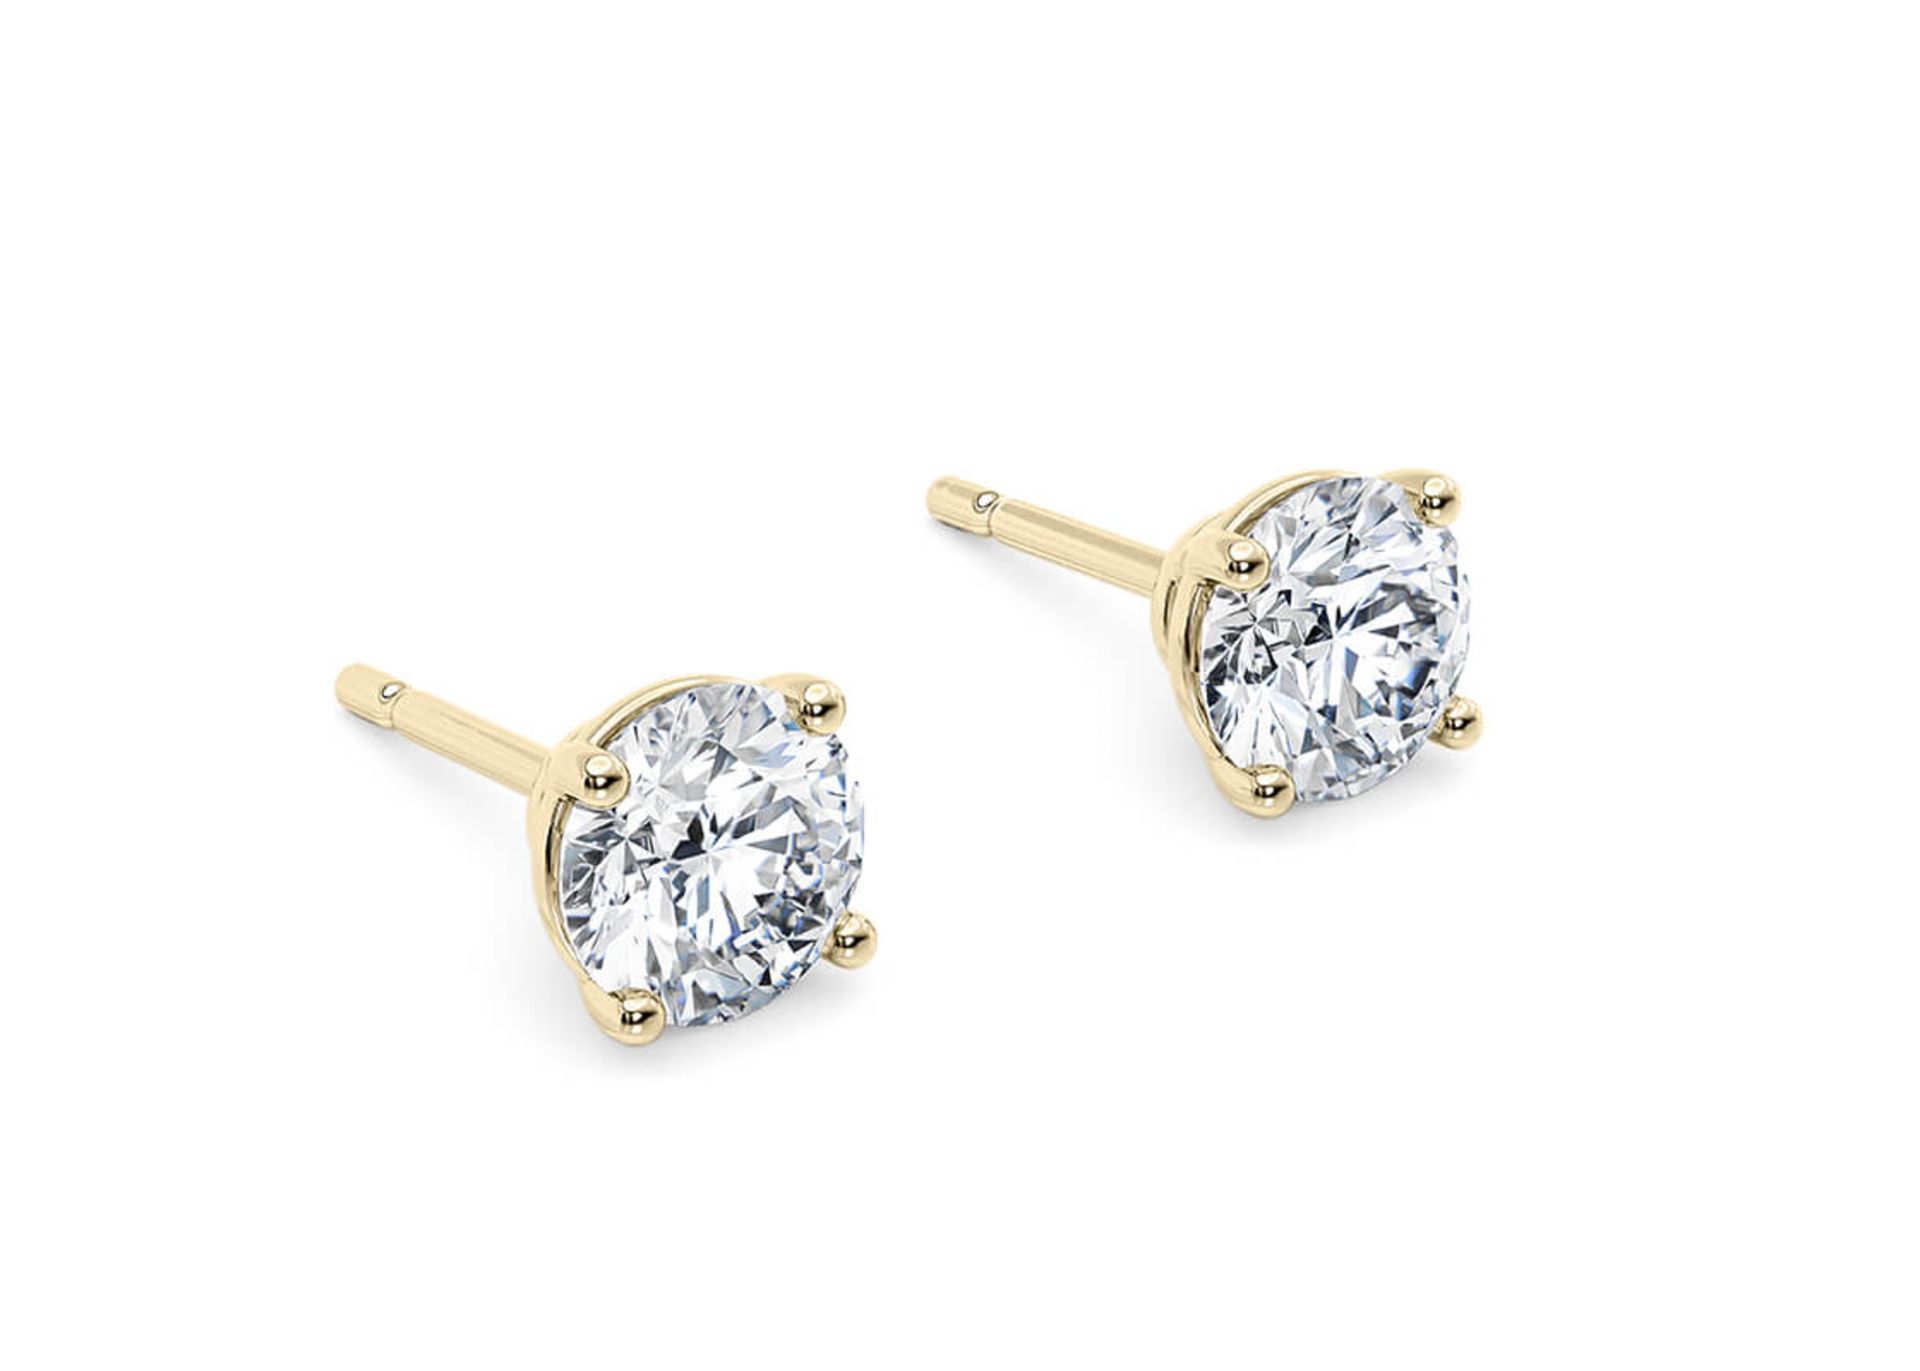 Round Brilliant Cut 3.00 Carat Diamond Earrings Set in 18kt Yellow Gold - E Colour VS Clarity - IGI - Image 2 of 3